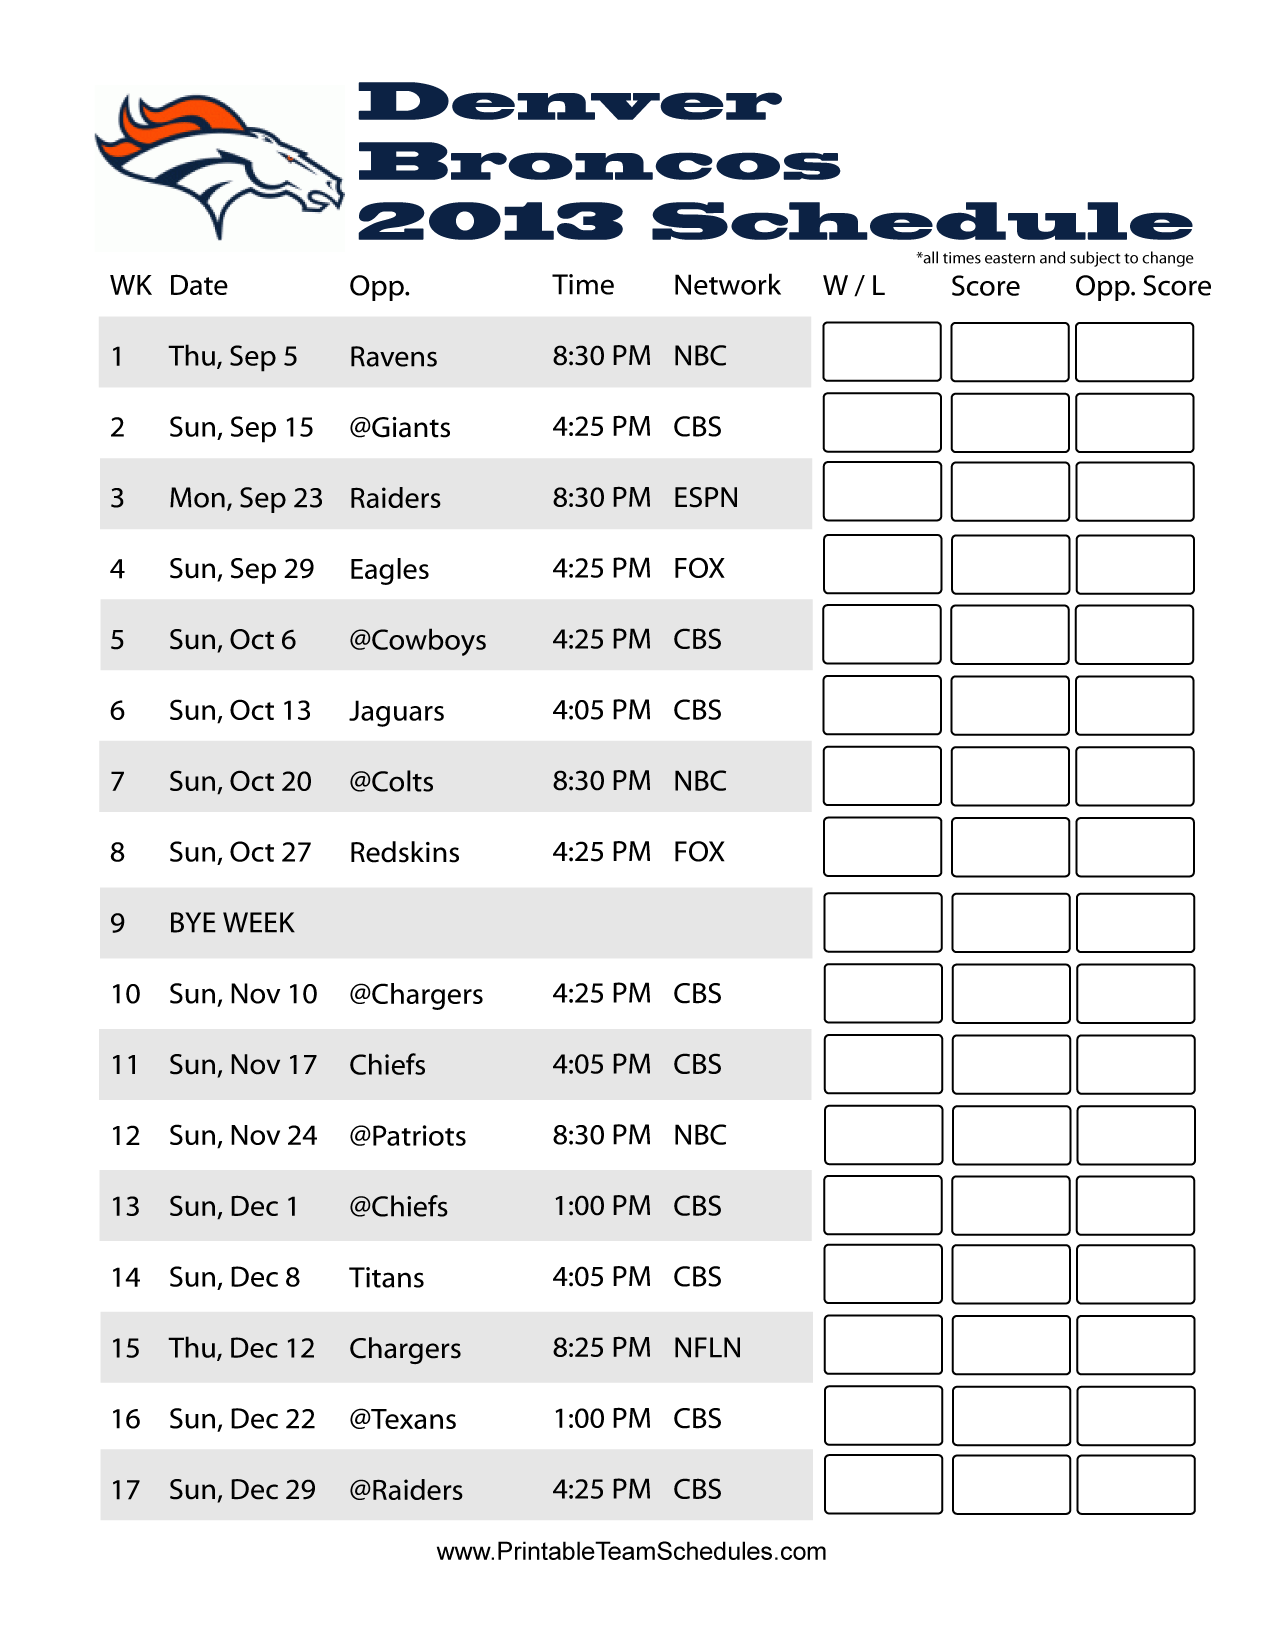 [50+] Denver Broncos 2016 Schedule Wallpaper on WallpaperSafari1275 x 1650